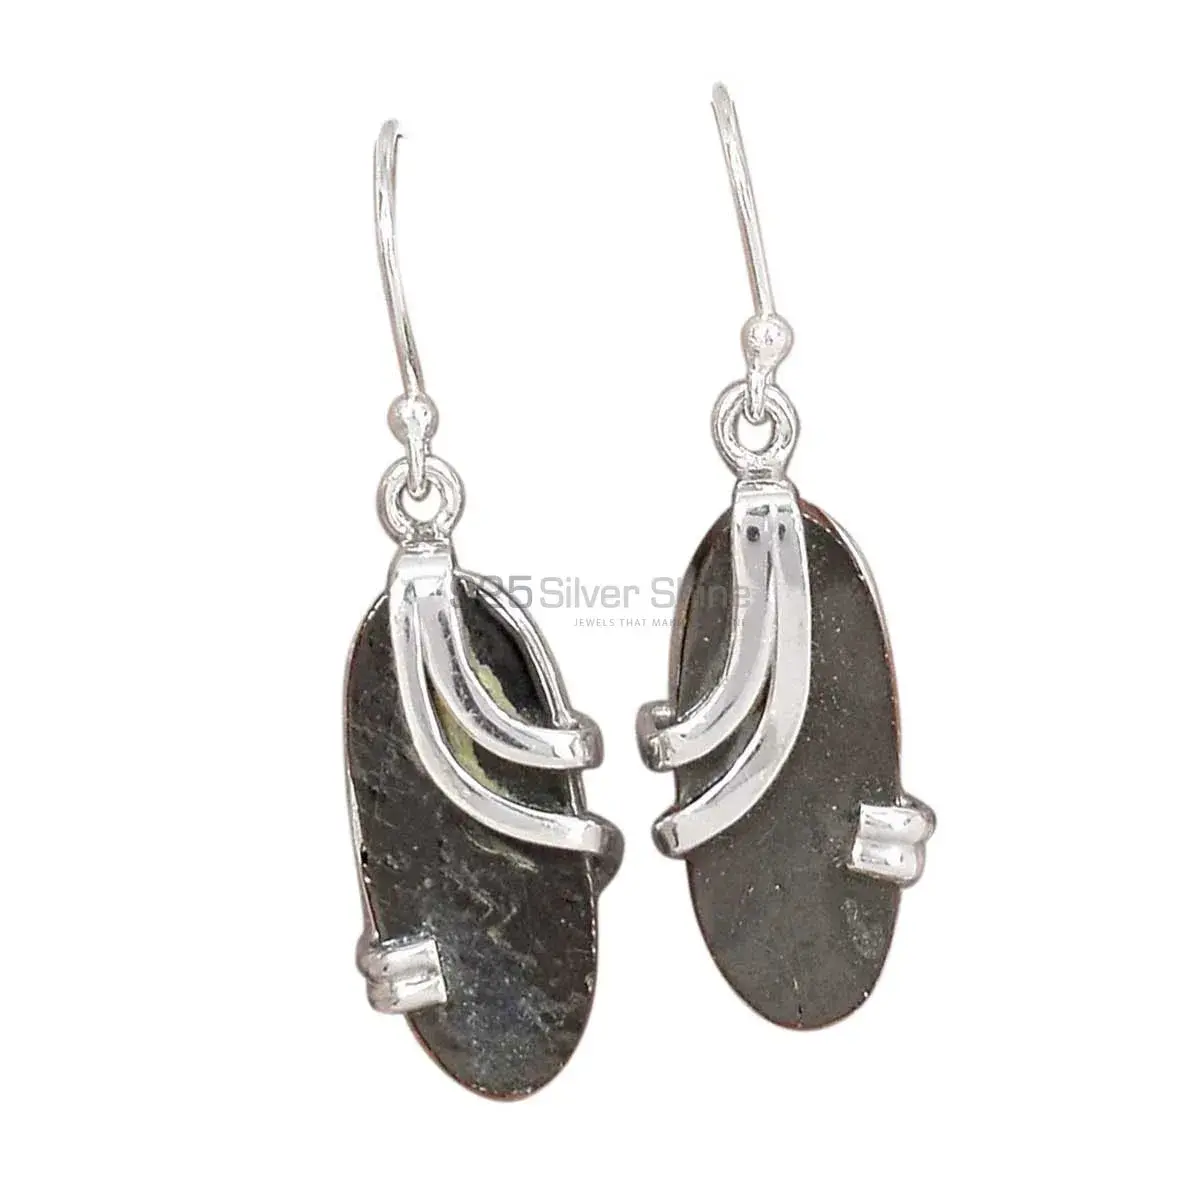 Best Design 925 Sterling Silver Handmade Earrings Exporters In Shungite Gemstone Jewelry 925SE2088